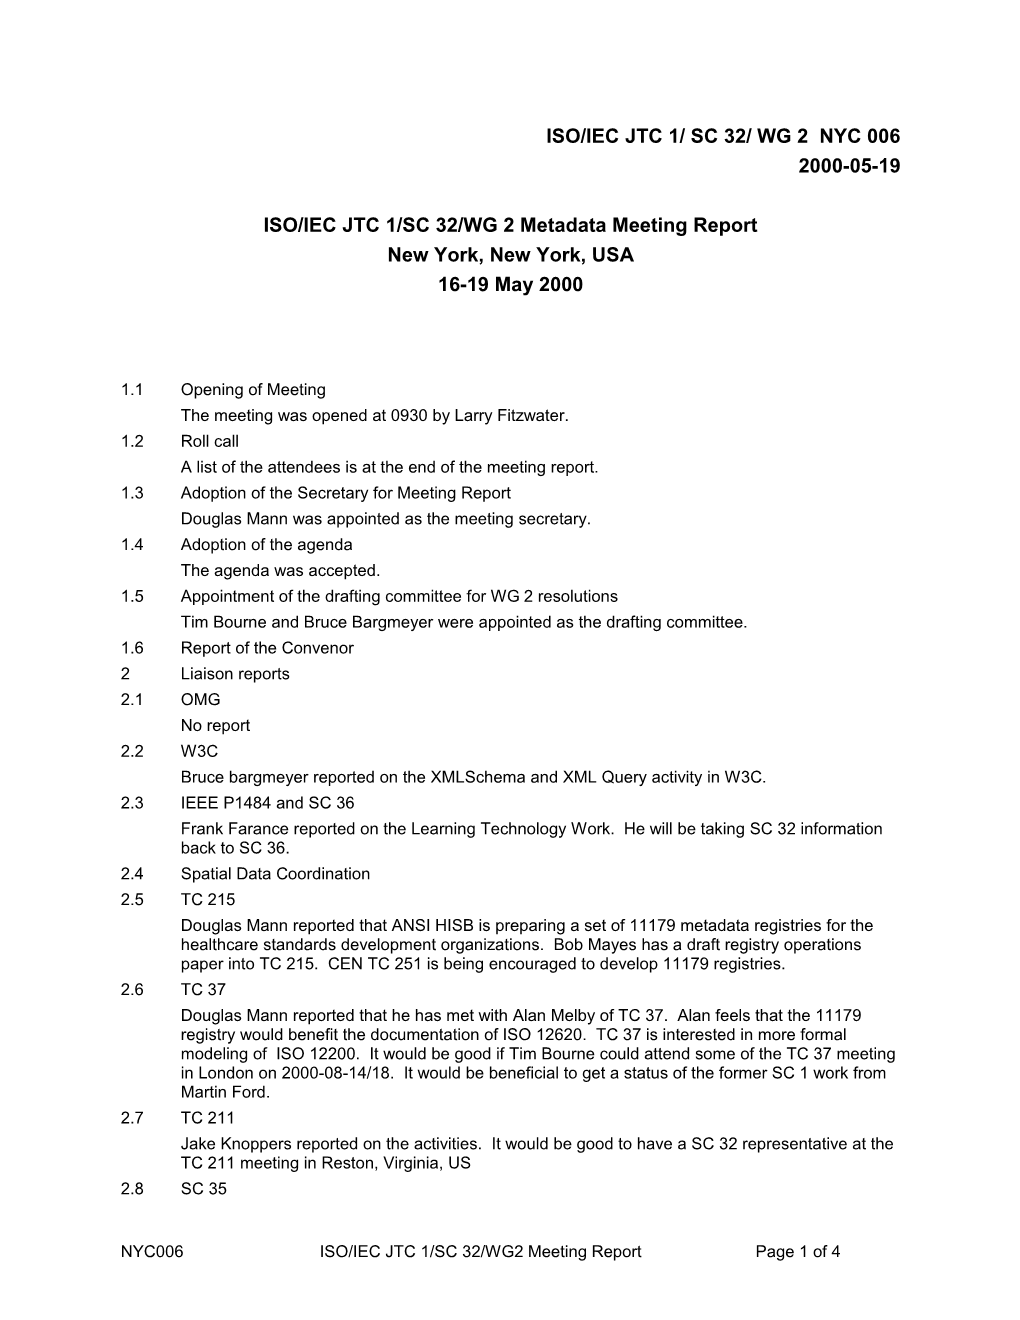 ISO/IEC JTC 1/SC 32/WG 2 Metadata Meeting